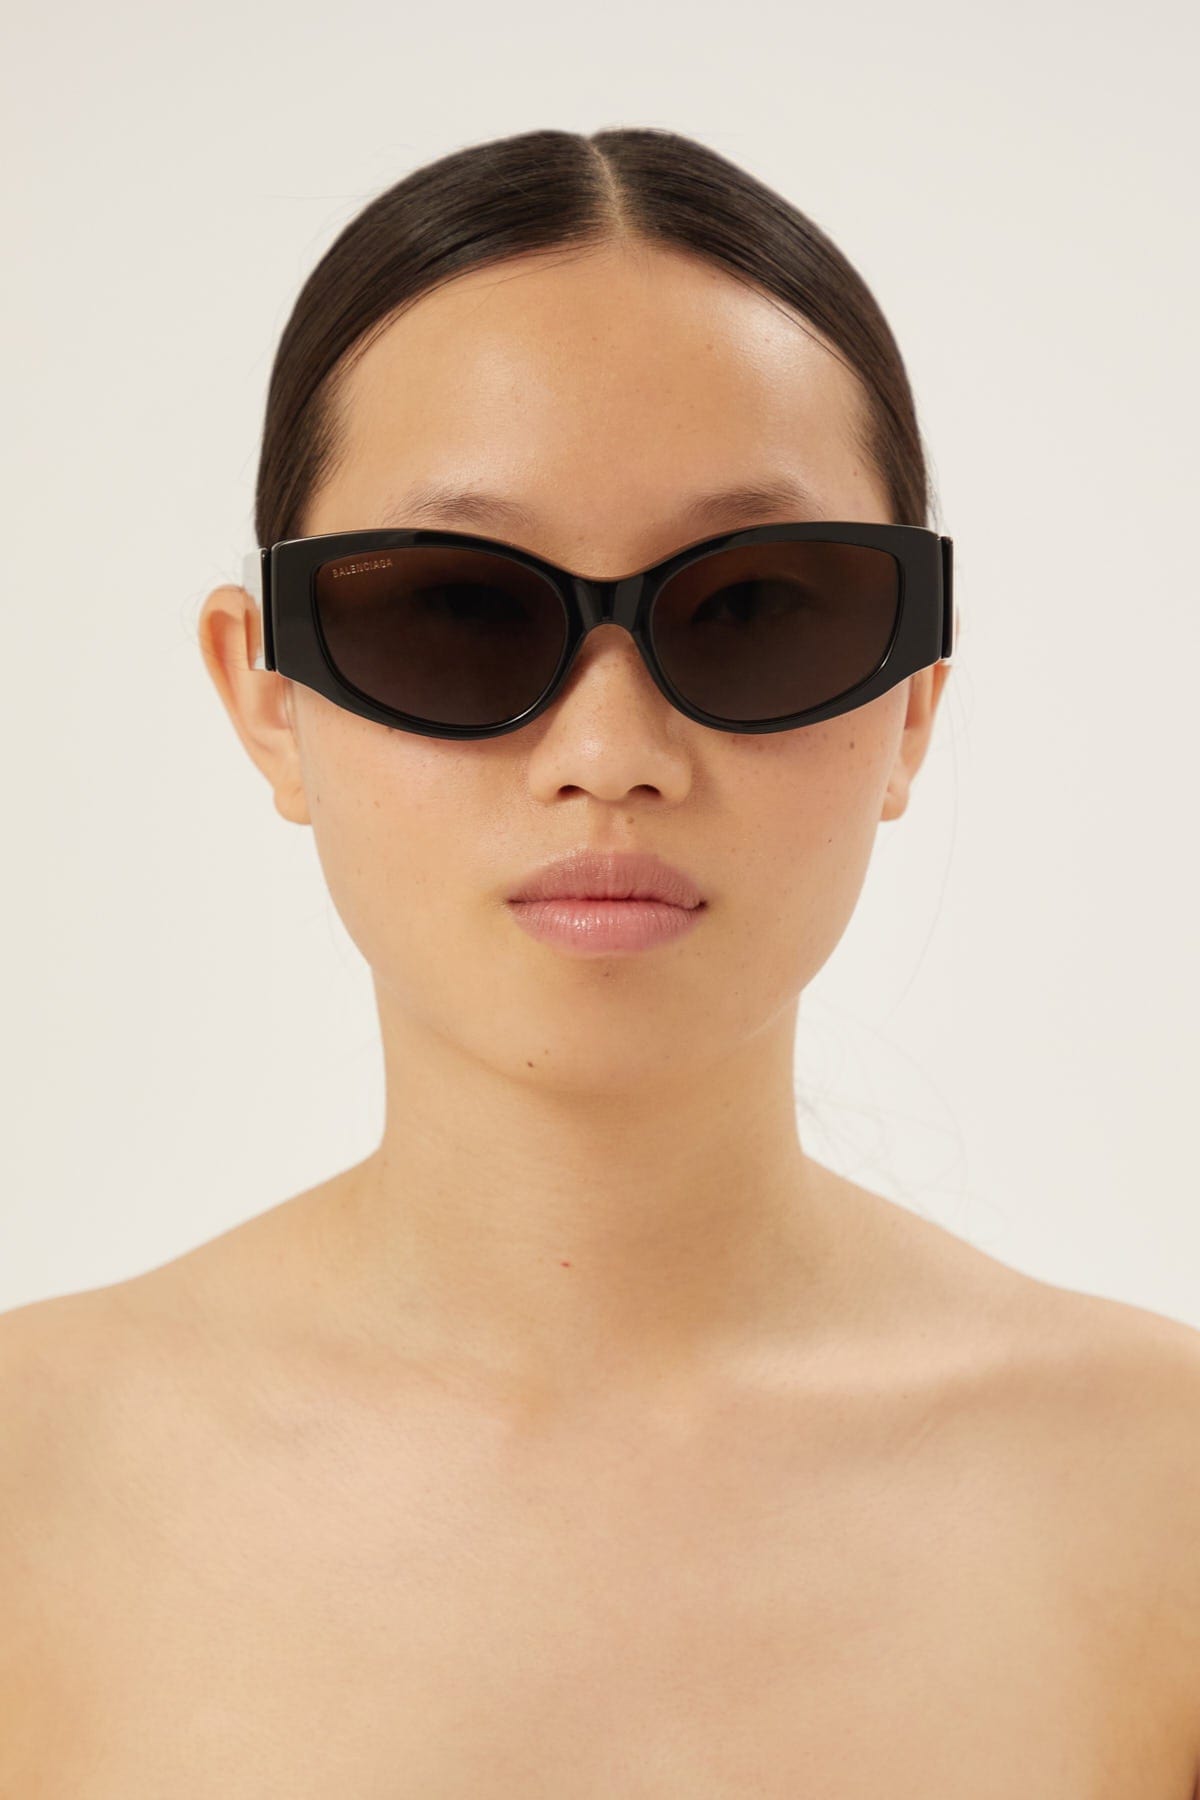 Balenciaga chunky black sunglasses - Eyewear Club